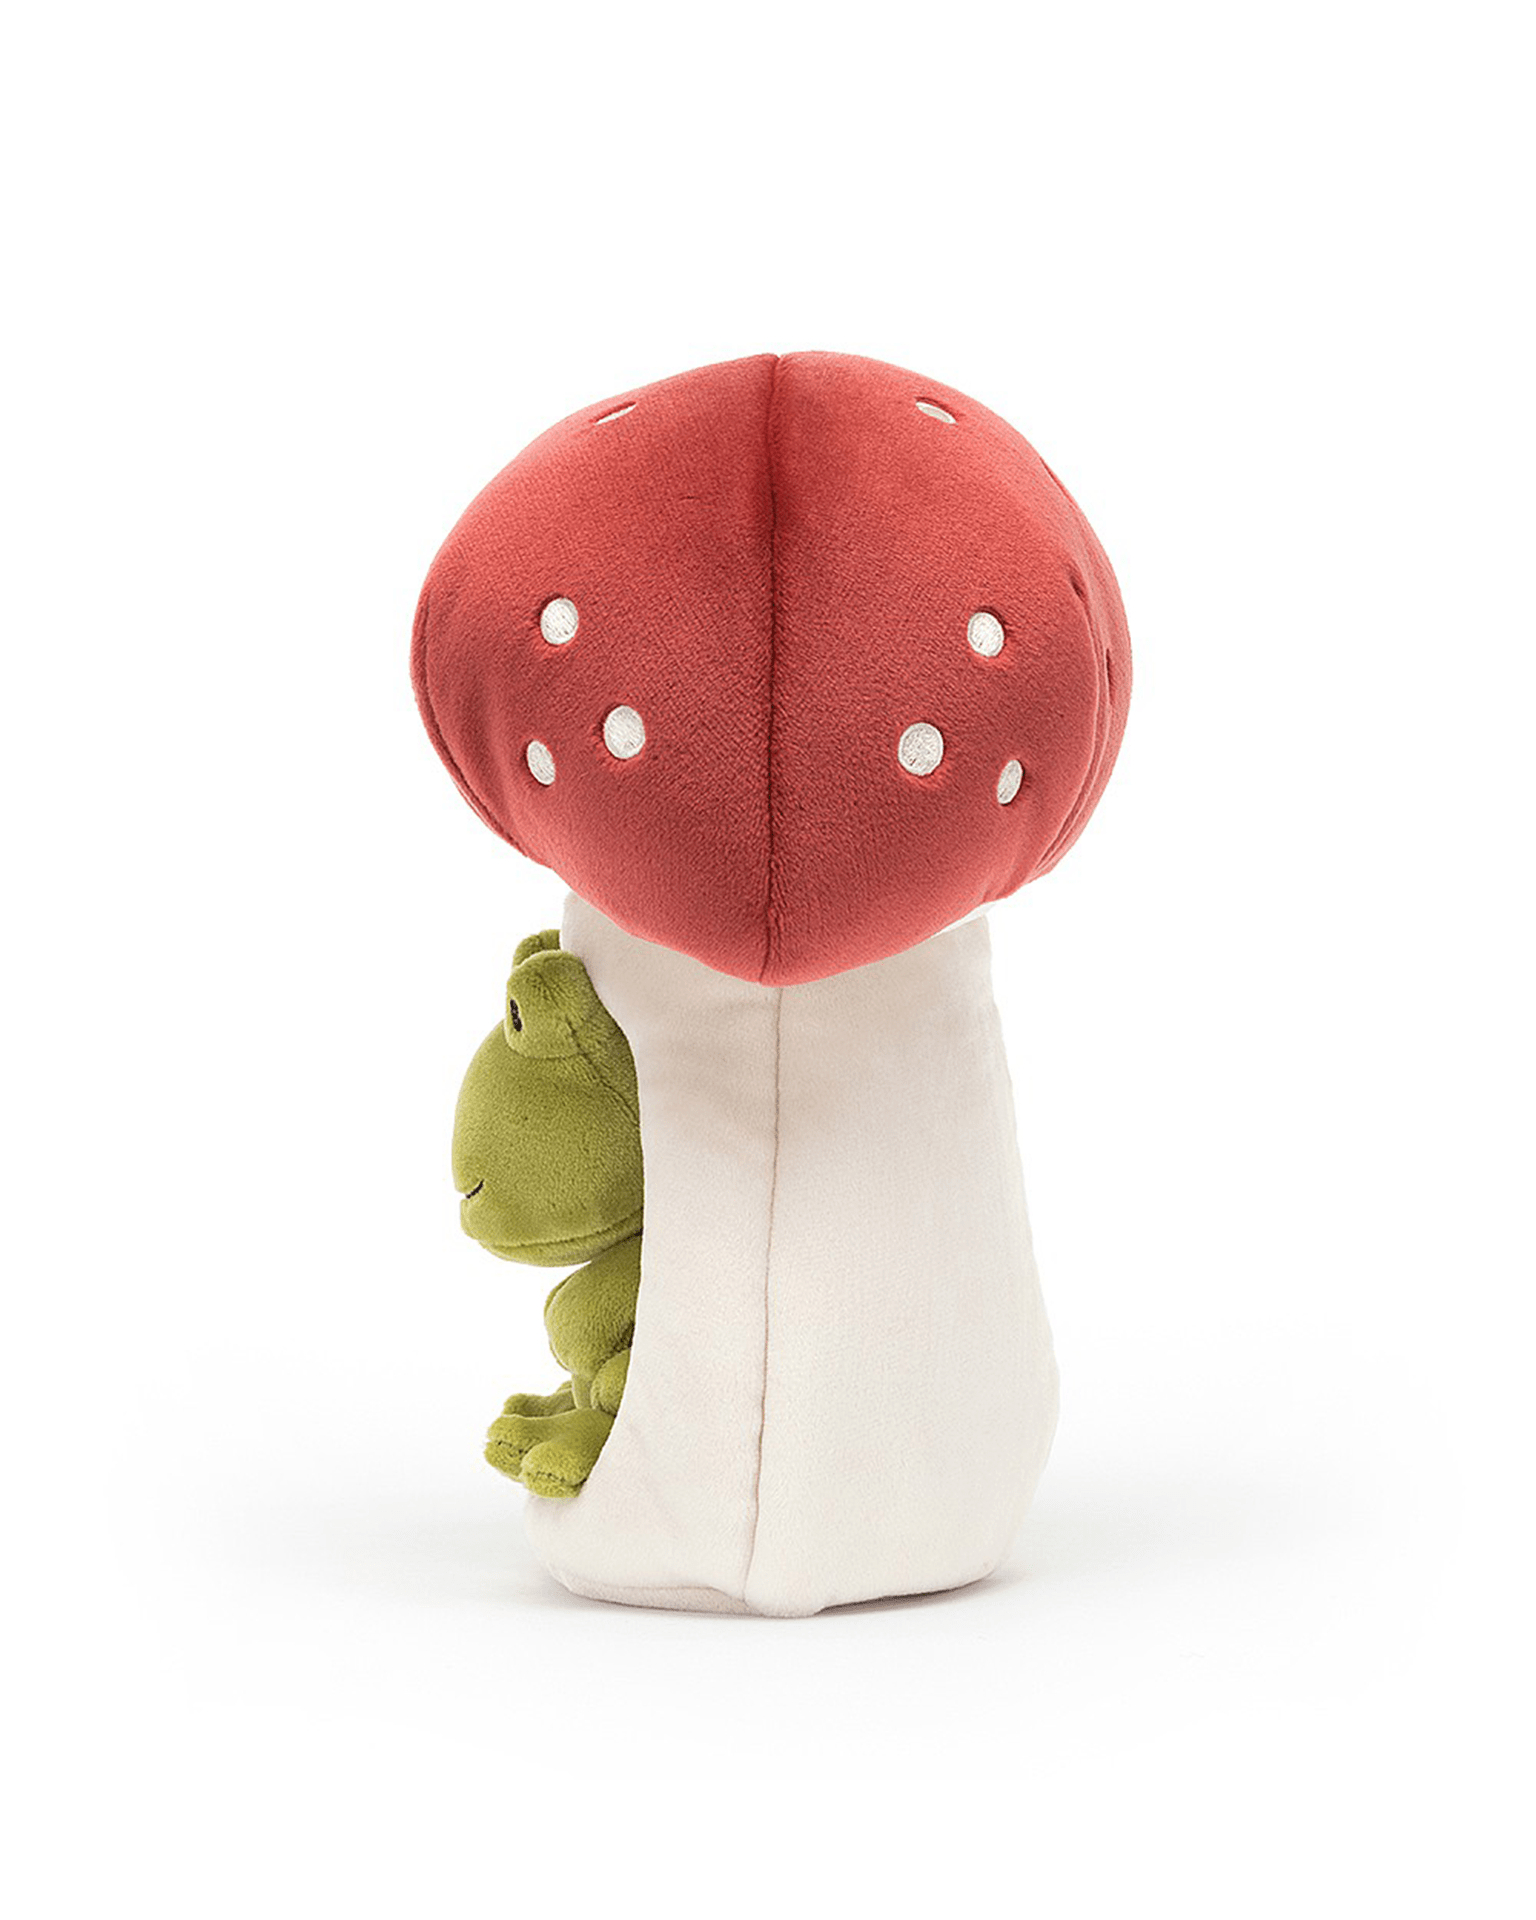  Cute Frog Plush Doll with Red Mushroom Hat Stuffed